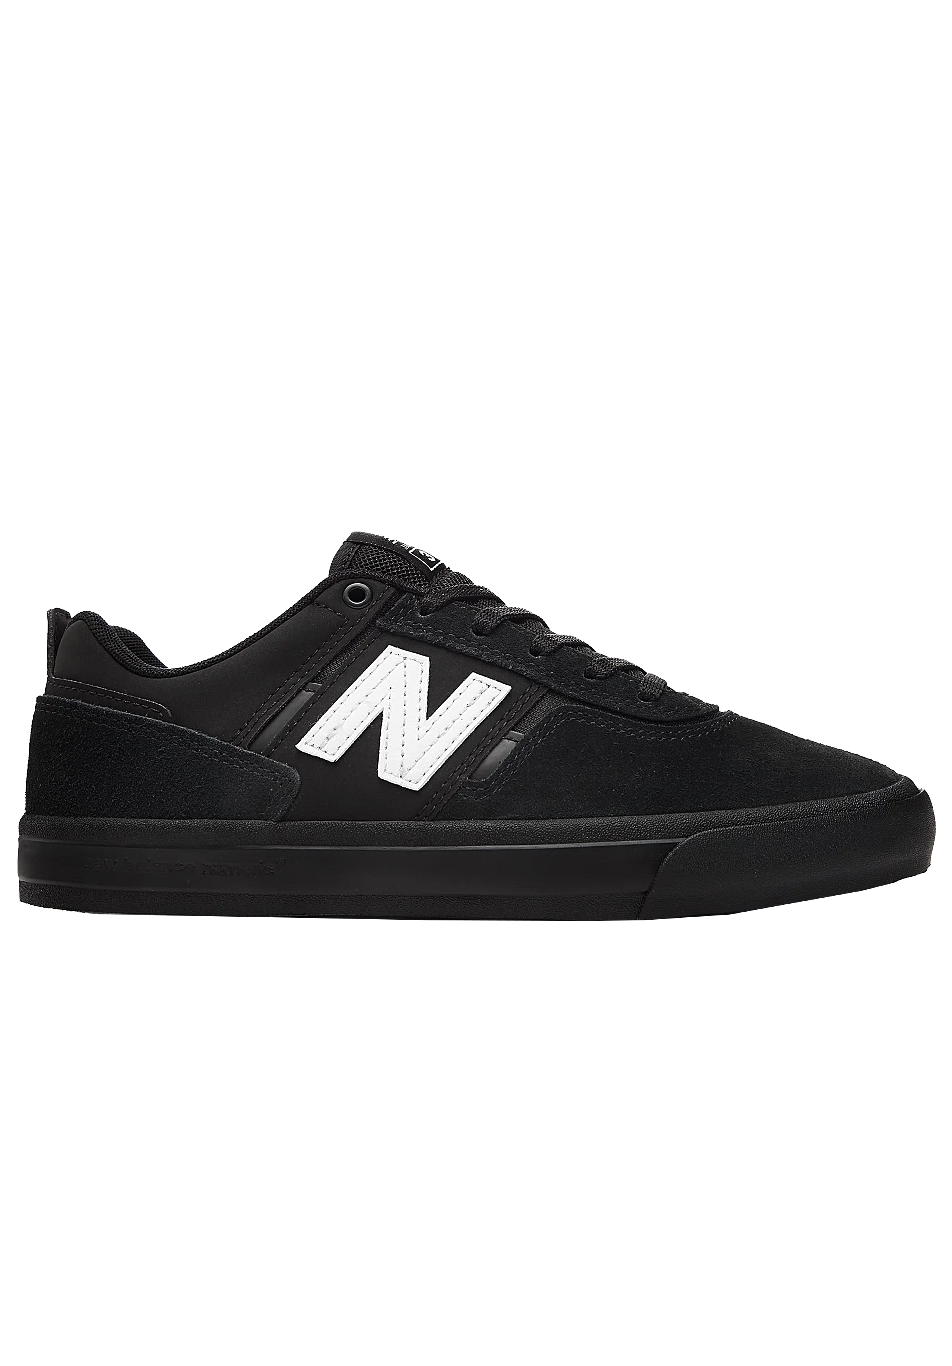 NM306FDF Jamie Foy Shoe Black